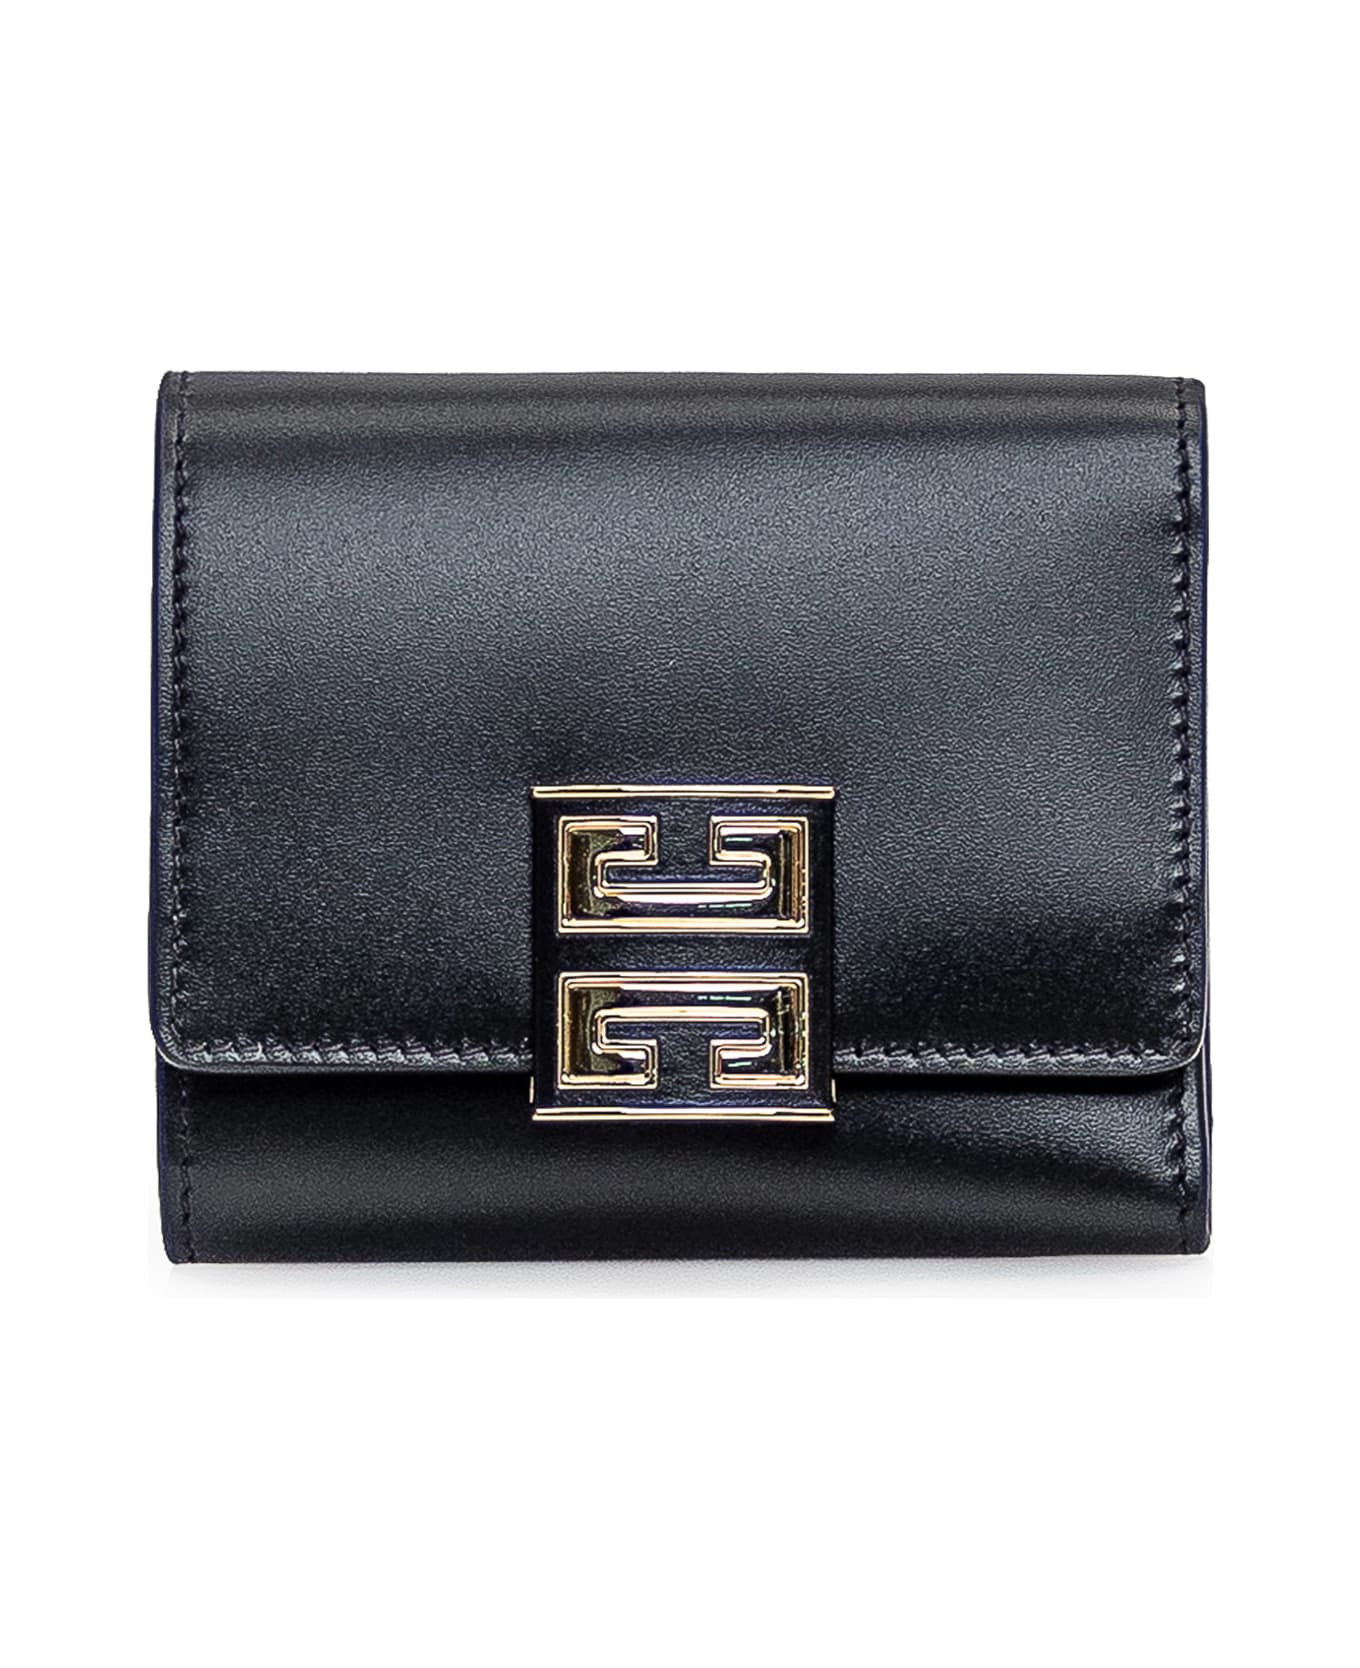 Givenchy 4g Tri-fold Wallet - BLACK